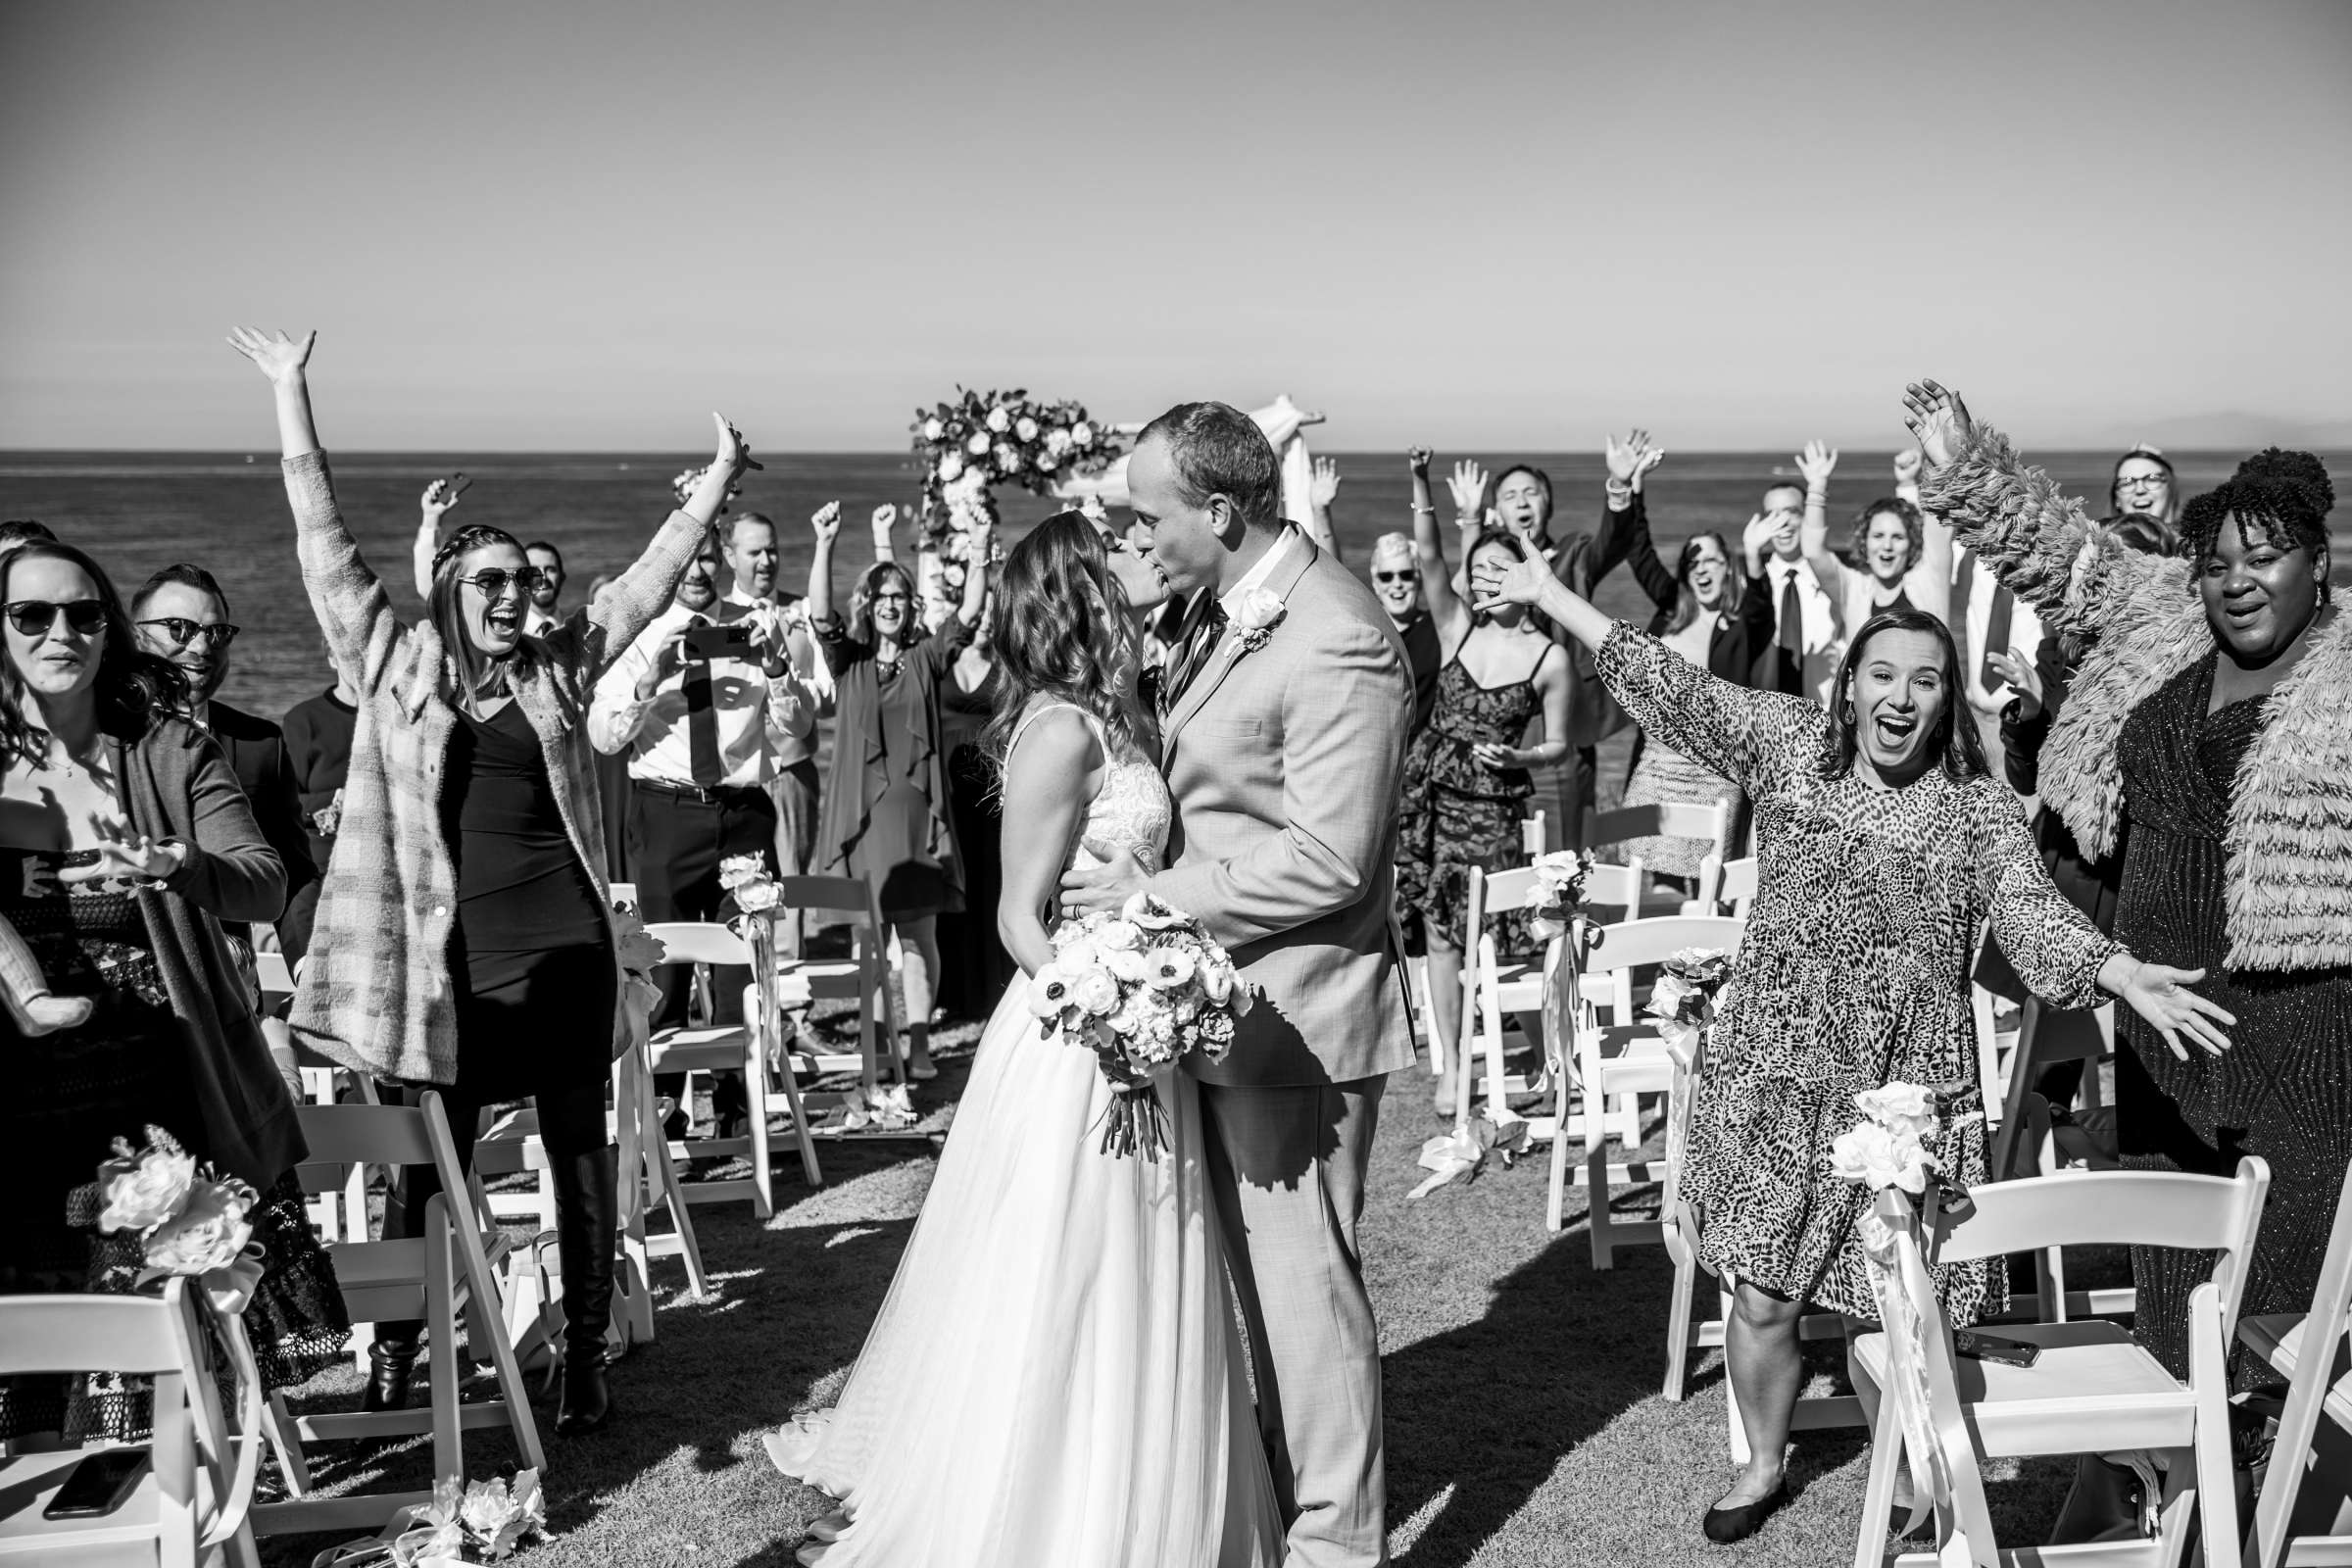 Cuvier Park-The Wedding Bowl Wedding, Jennifer and Tj Wedding Photo #15 by True Photography